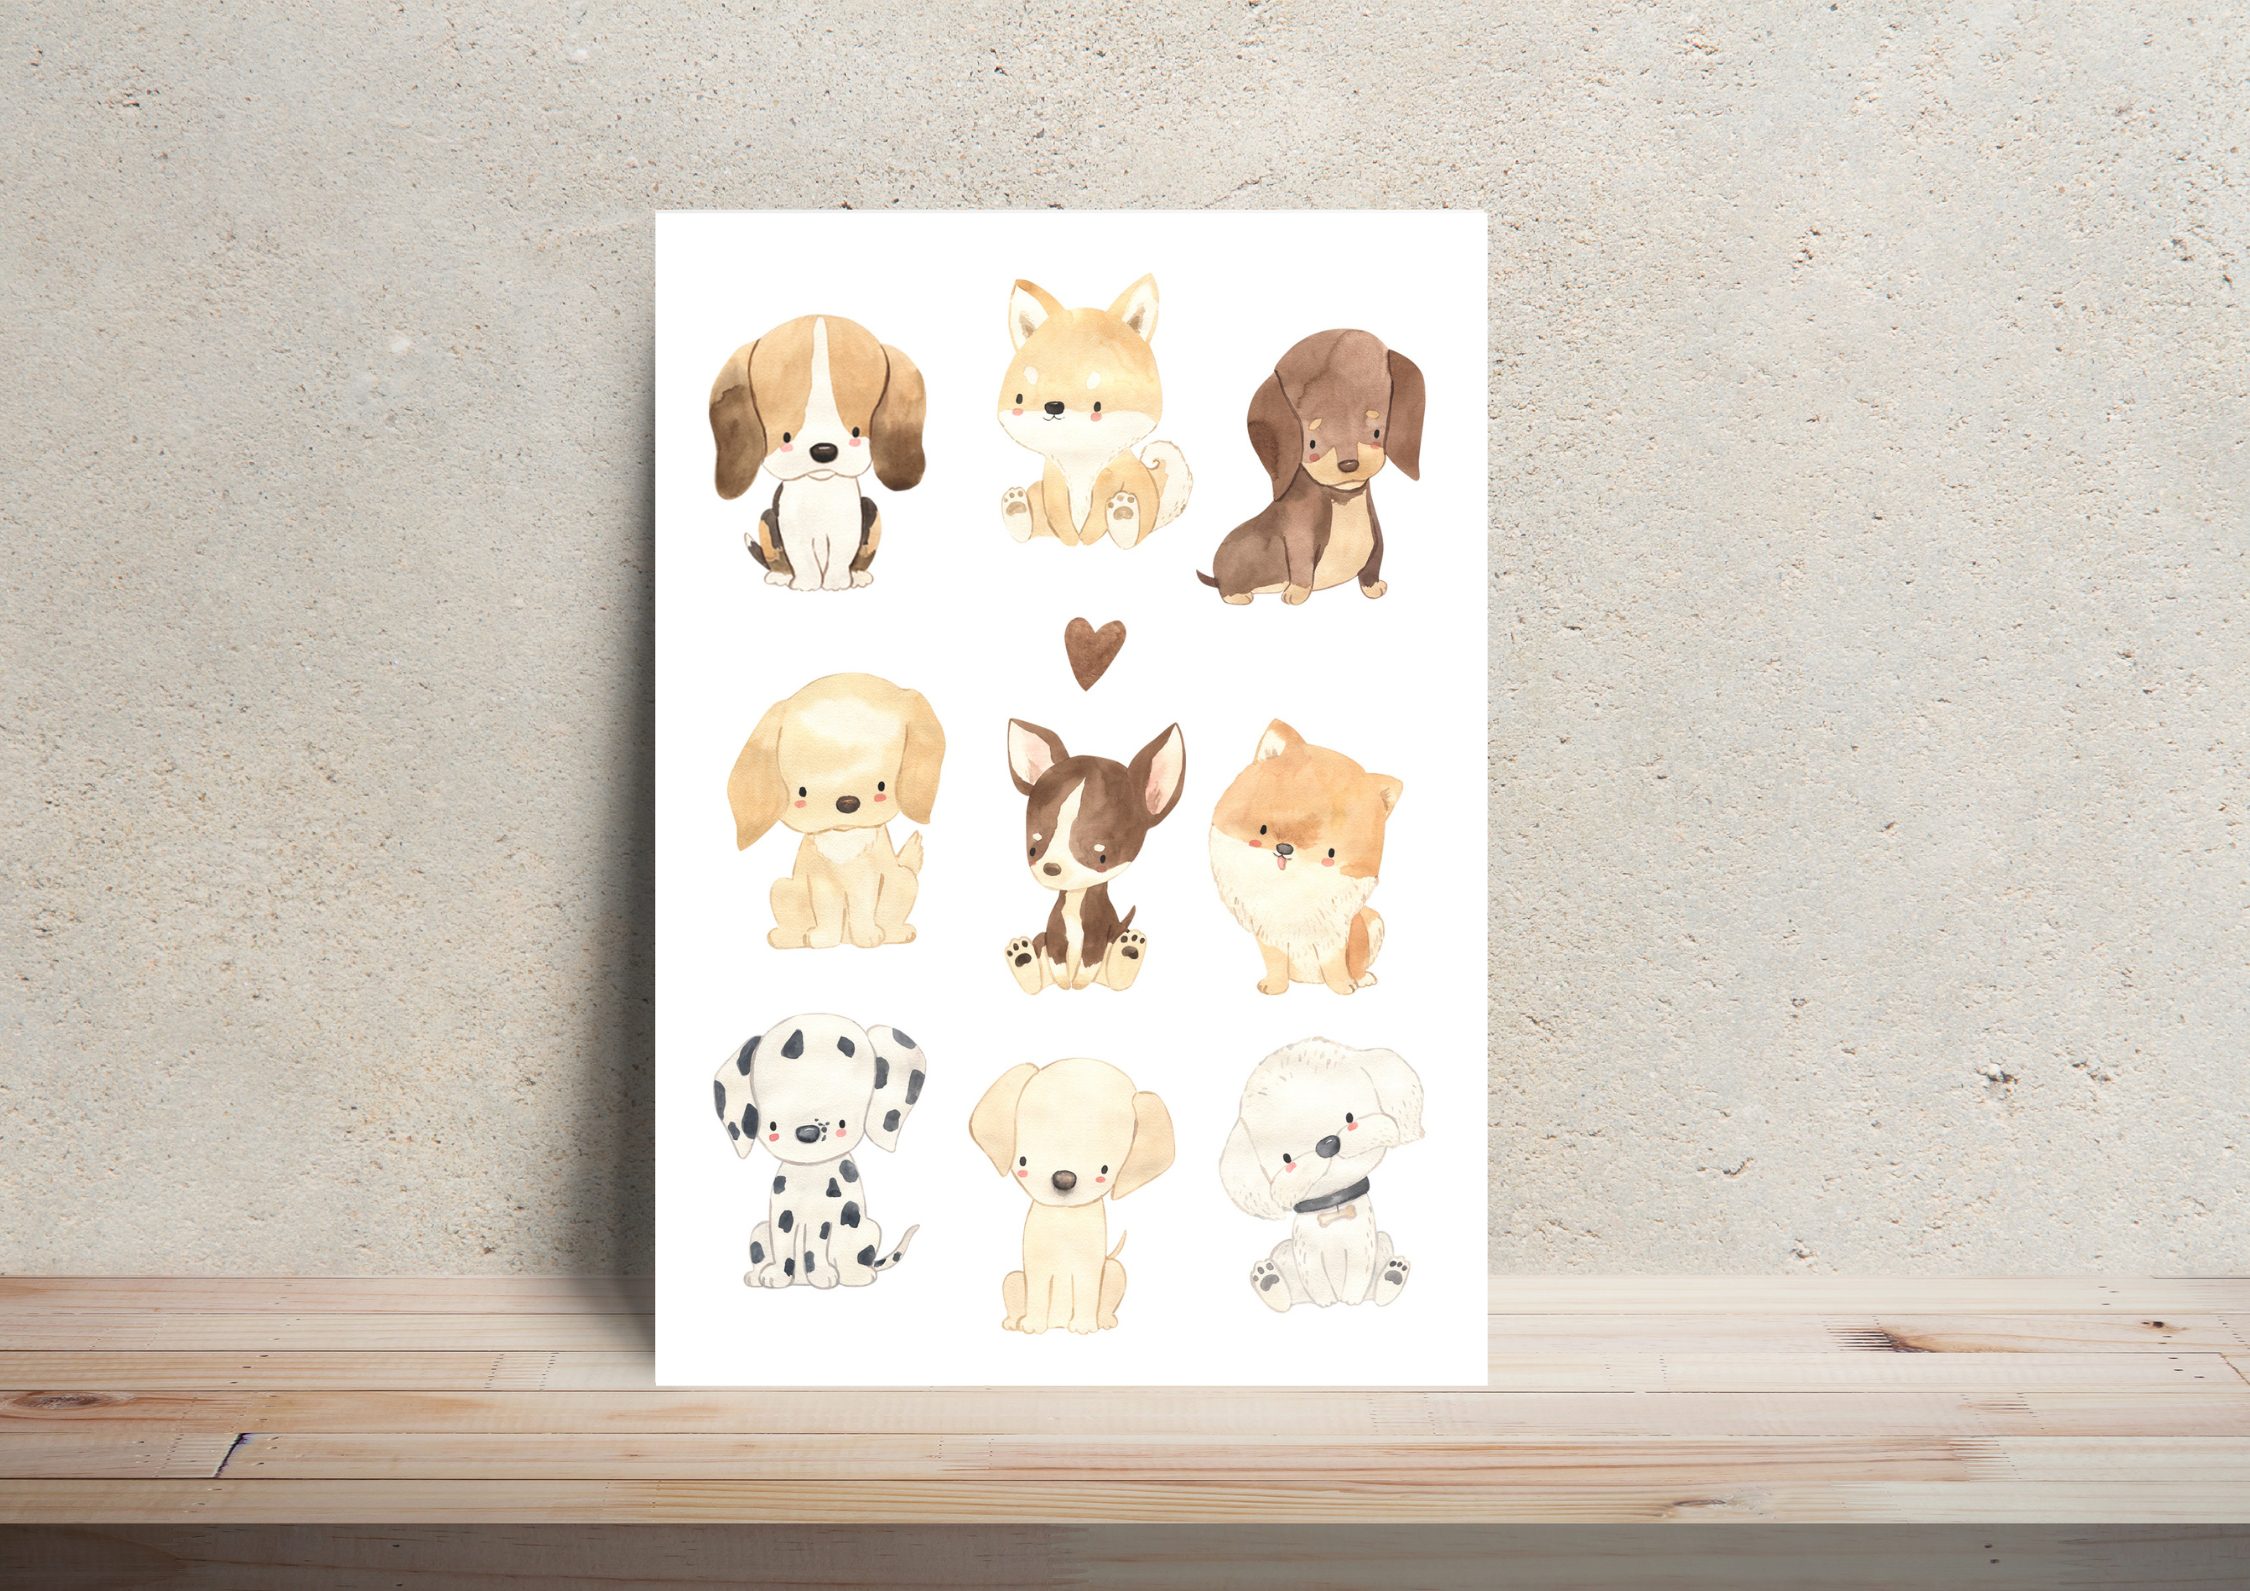 Karte Hund, Hunderassen Postkarte, Geschenk Hundeliebhaber, DIN A6, Postkarte Hund, Dackel, Golden Retriever, Labrador, Dalmatiner, Pudel